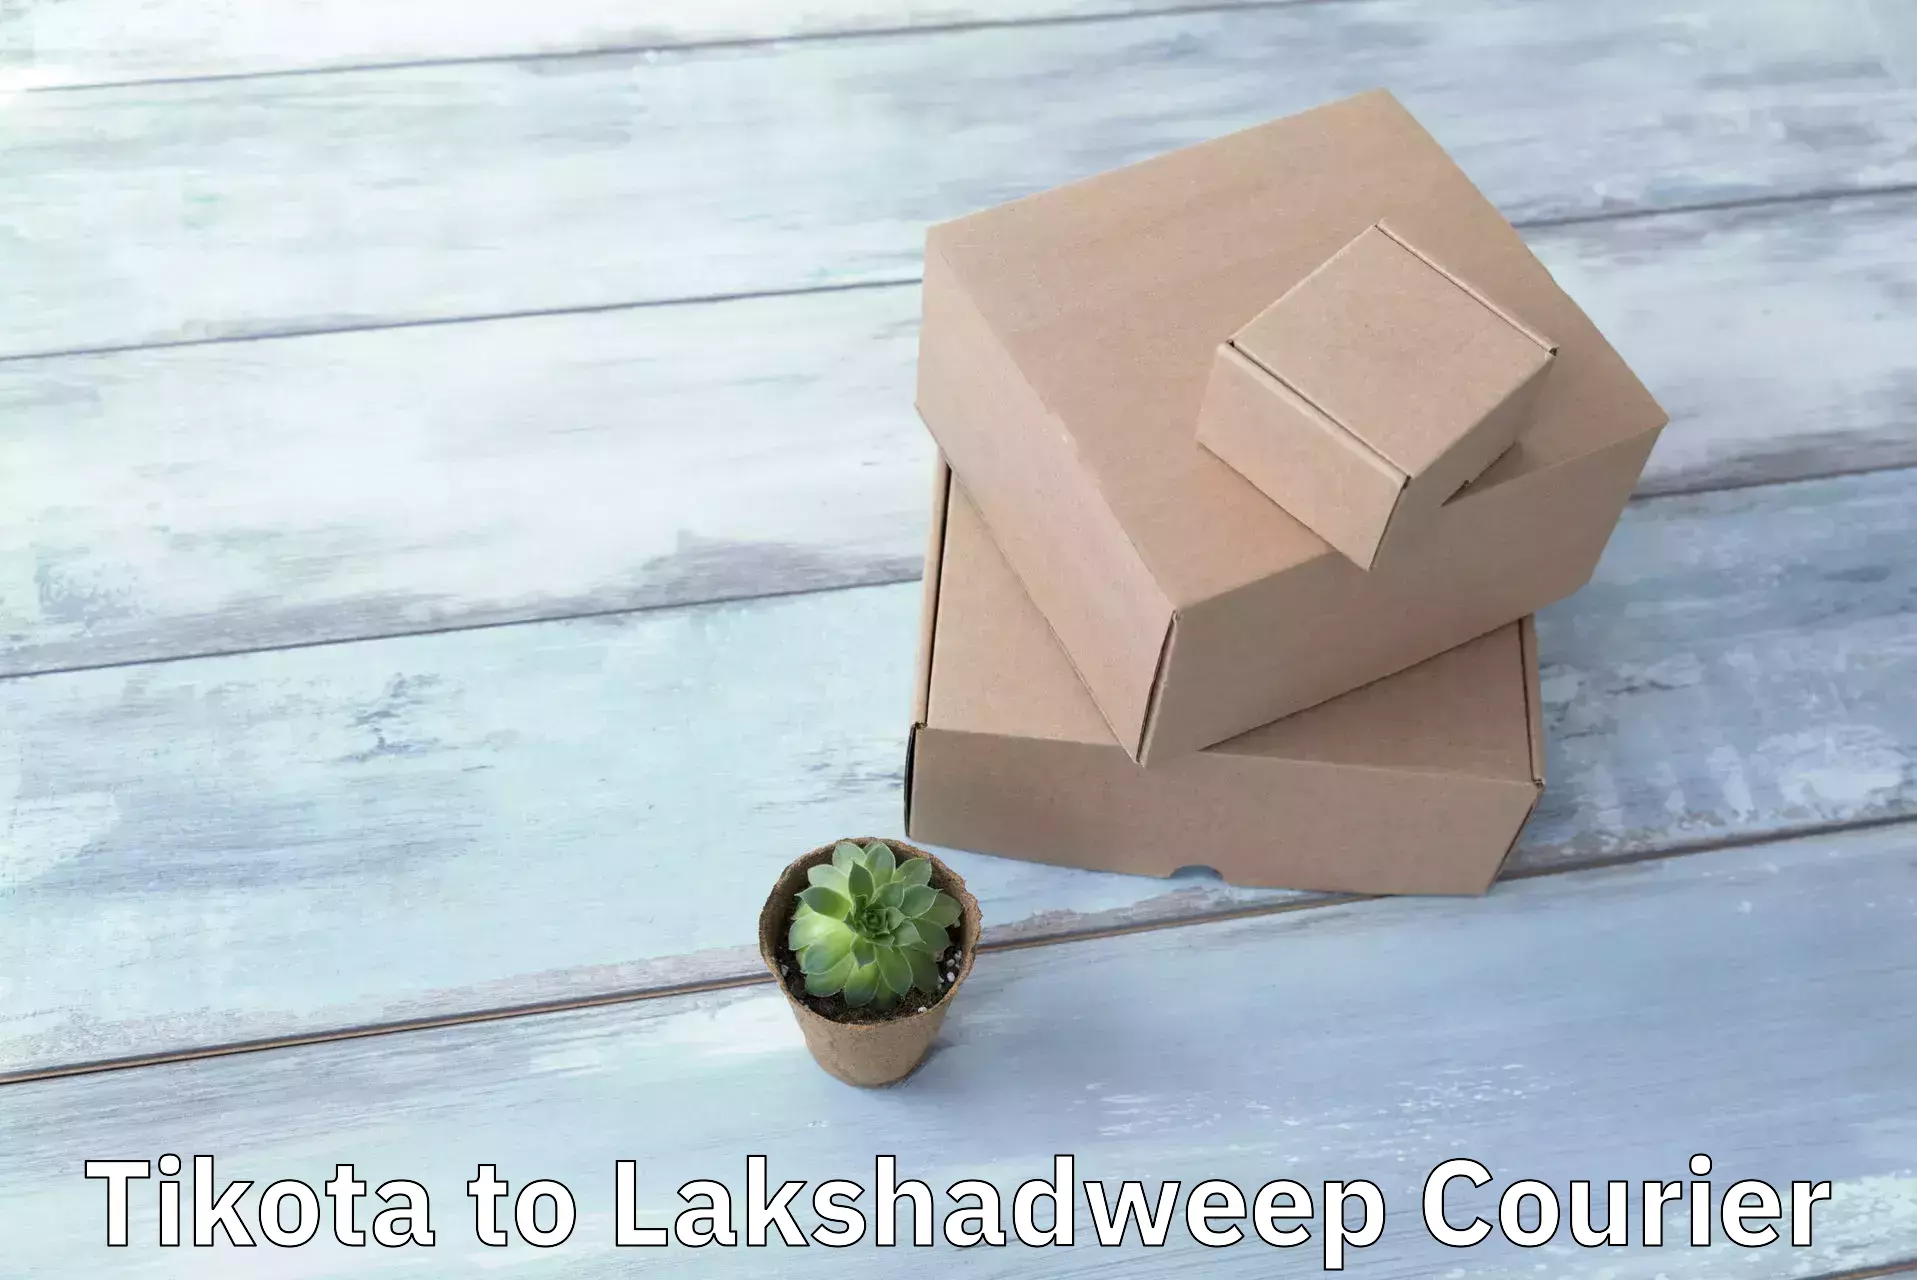 Courier service innovation Tikota to Lakshadweep